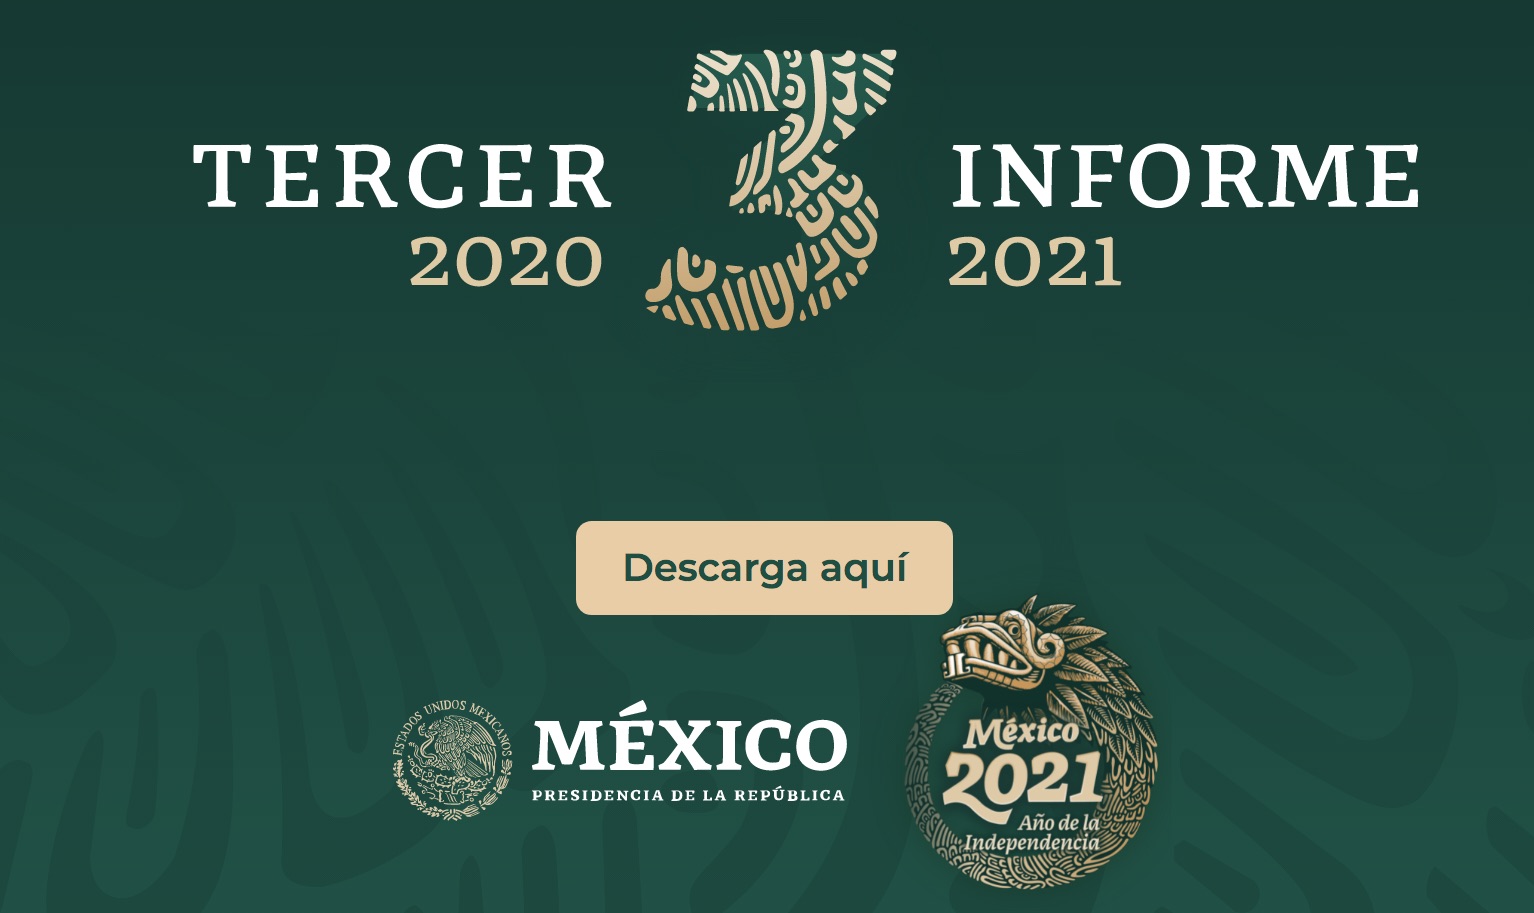 Tercer Informe, presidente Andrés Manuel López Obrador